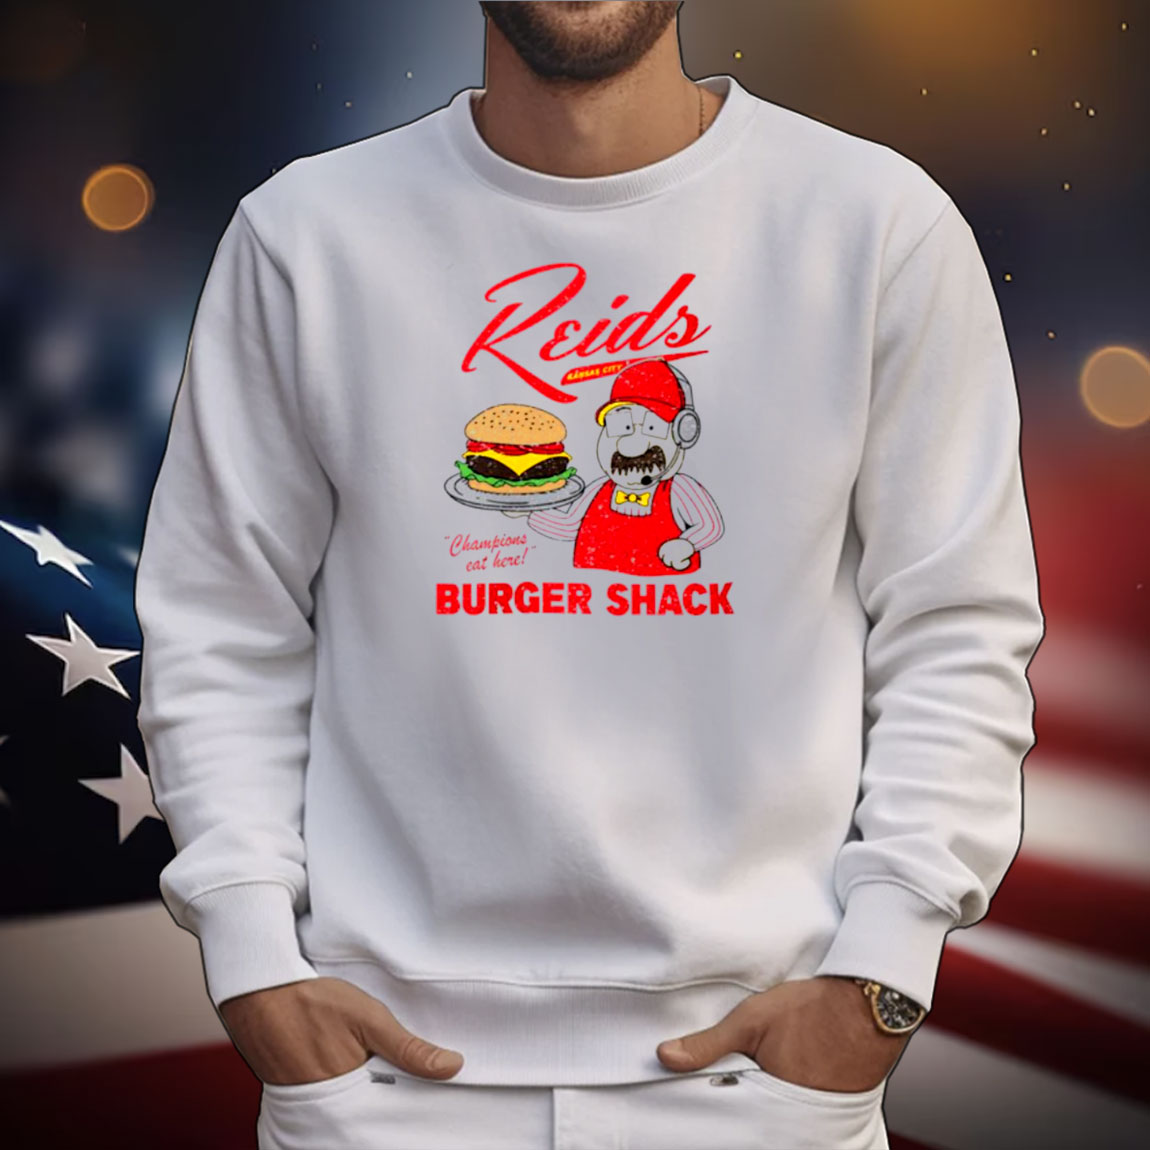 Champions Eat Here Keids Burger Shack Tee Shirts